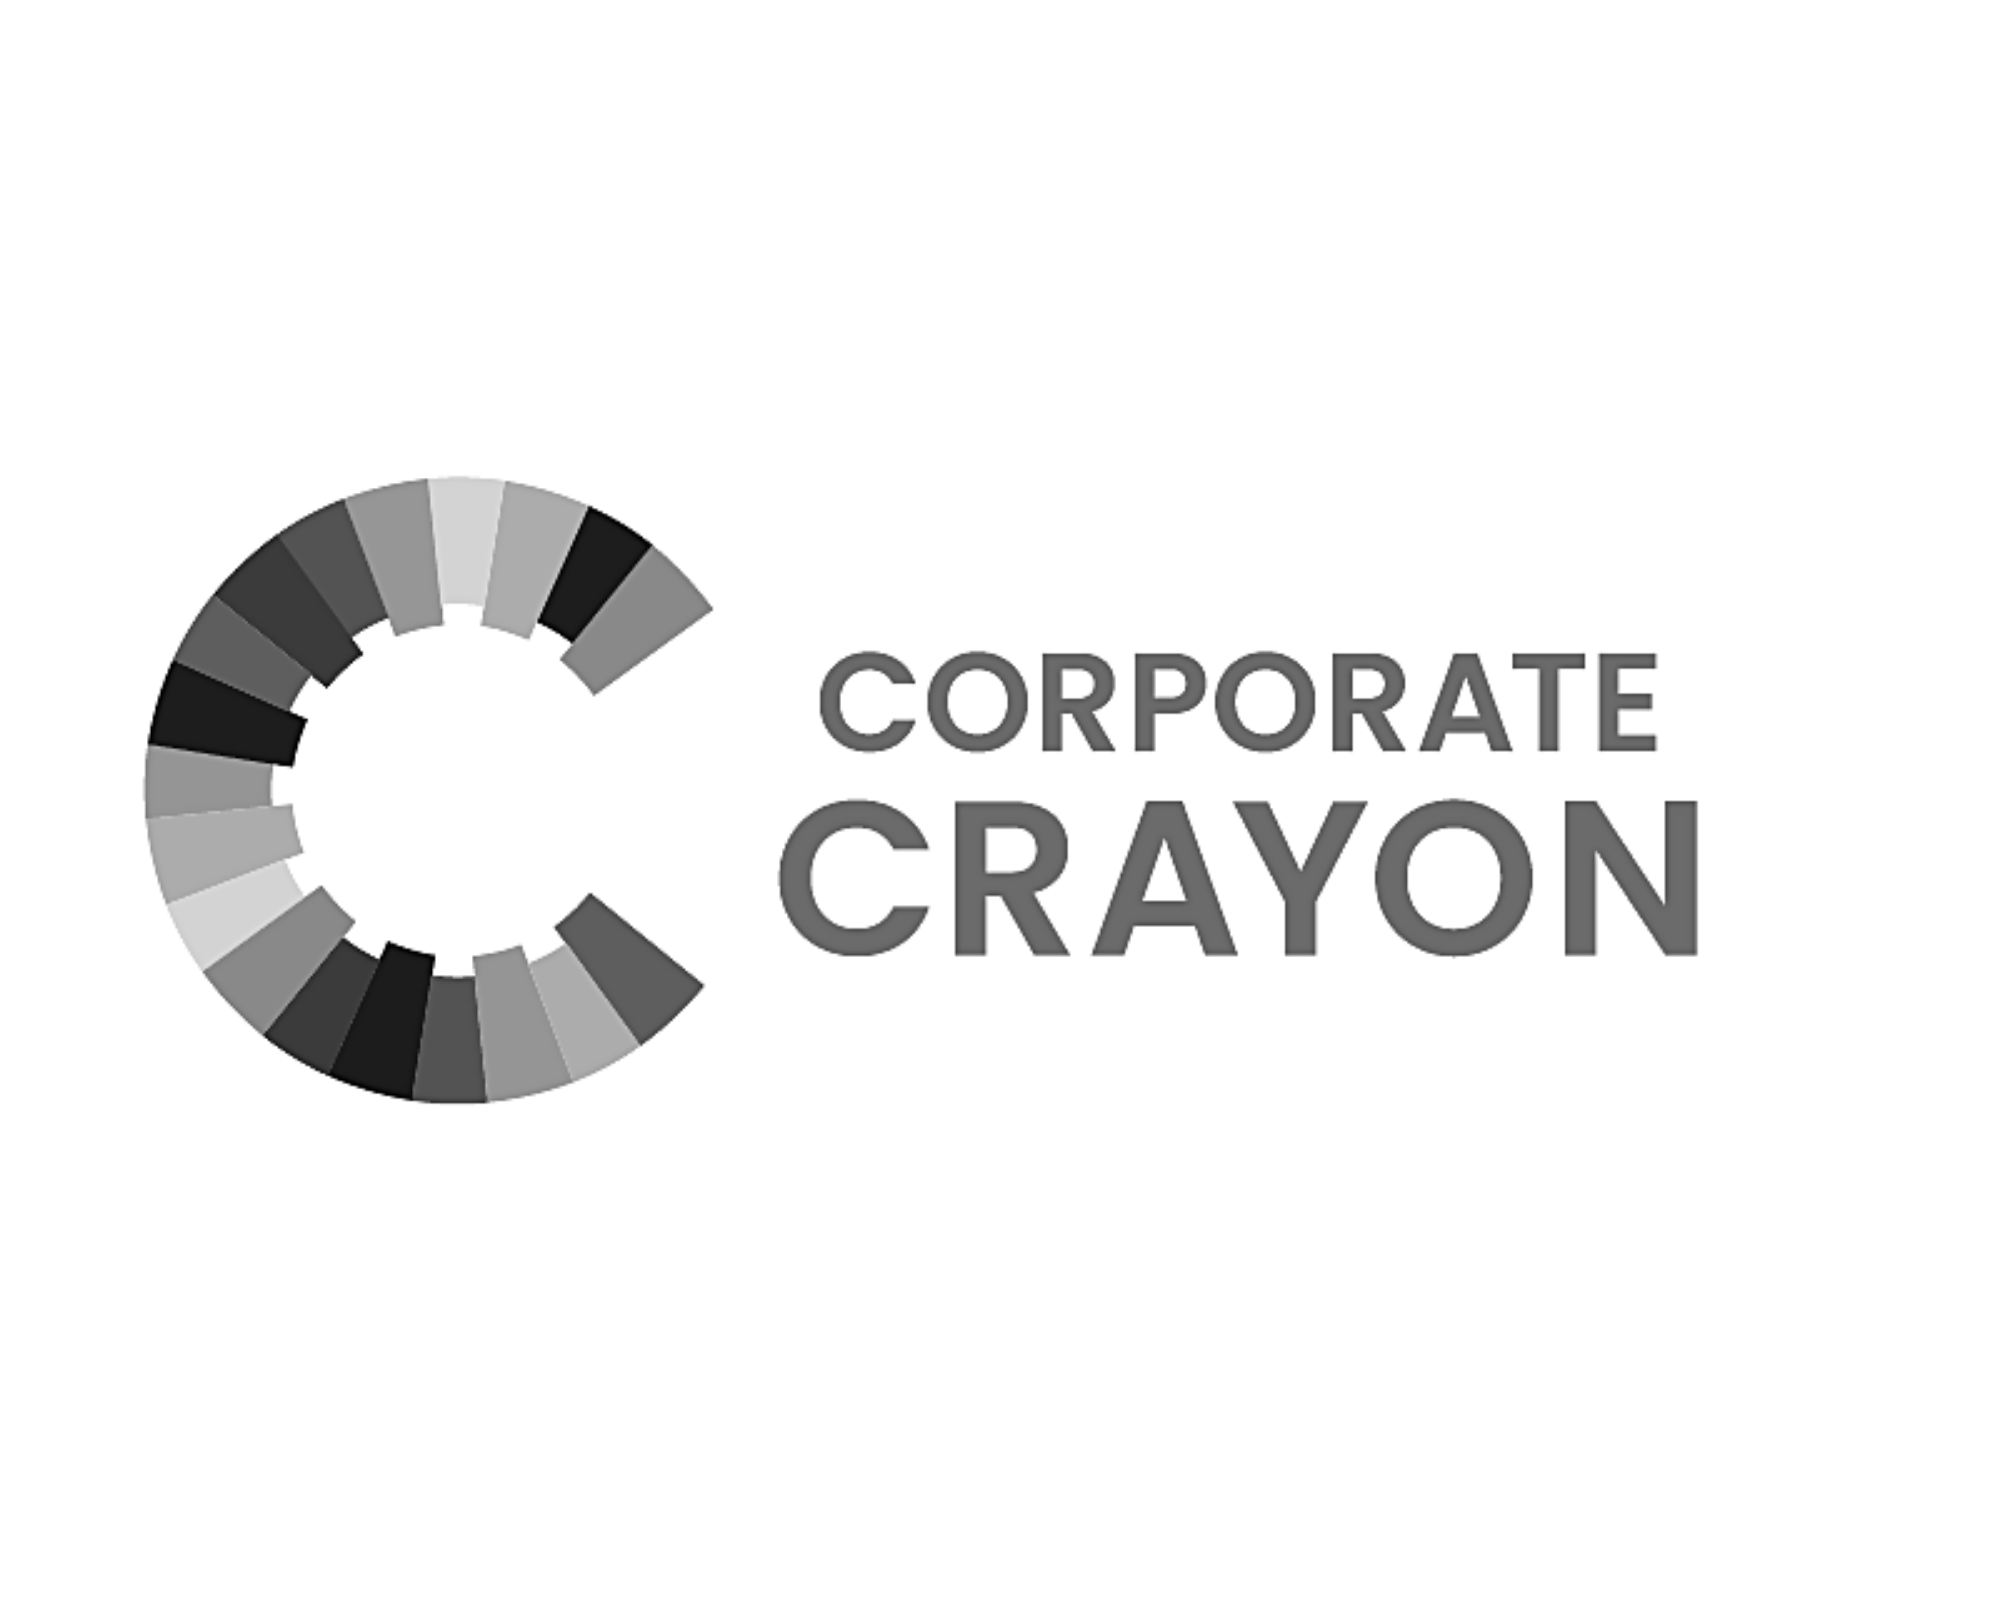 Corporate Crayon logo